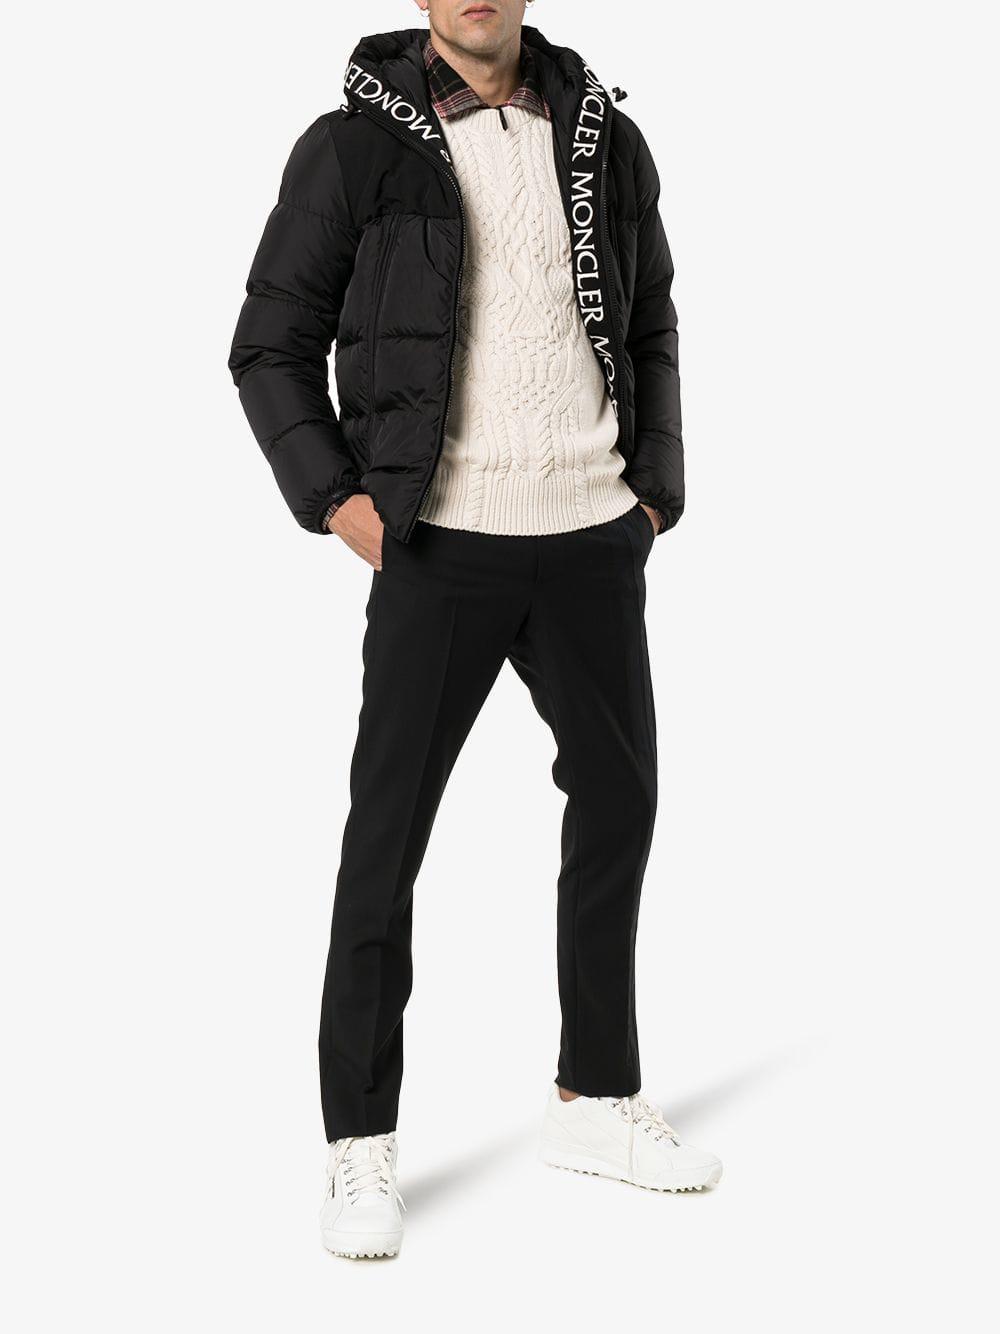 Moncler Synthetic Montclar Hooded Padded Jacket in Black for Men - Lyst